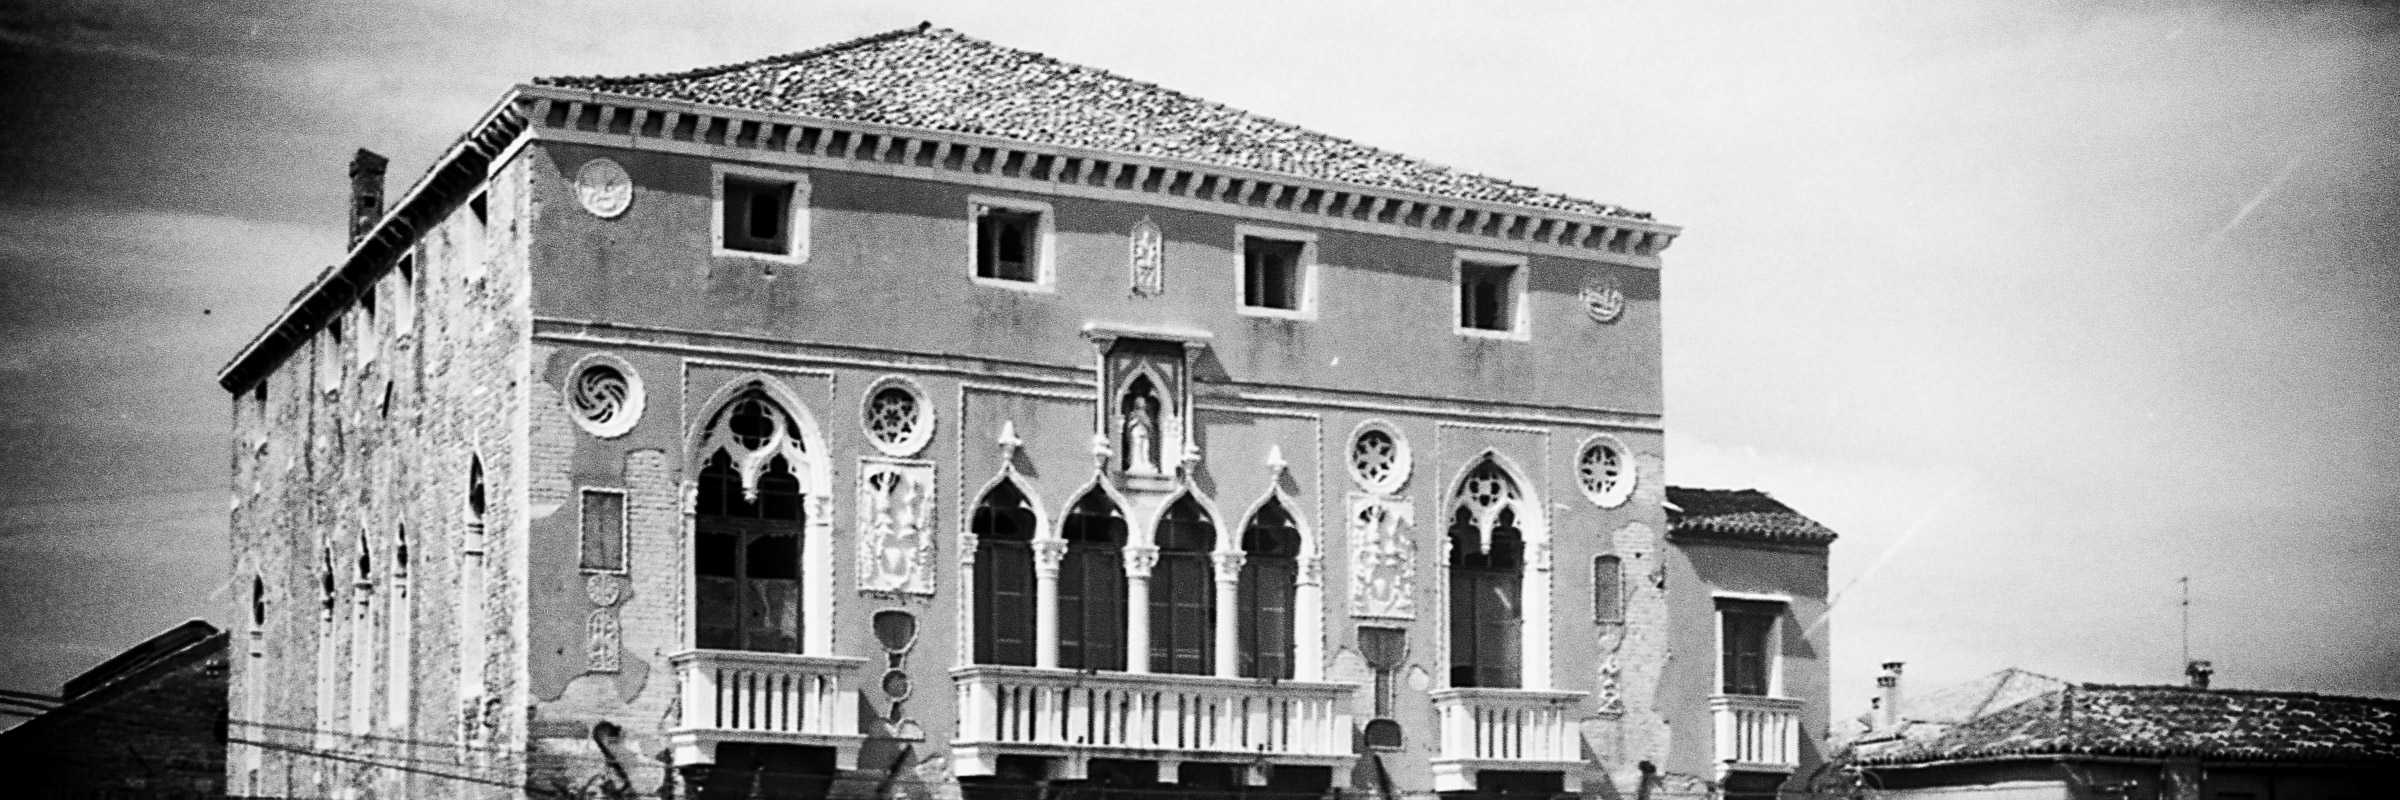 Venezia, 1969 / Paolo Monti. - Strisce: 4, Fotogrammi complessivi: 17 : Negativo b/n, gelatina bromuro d'argento/ pellicola ; 35 mm. 